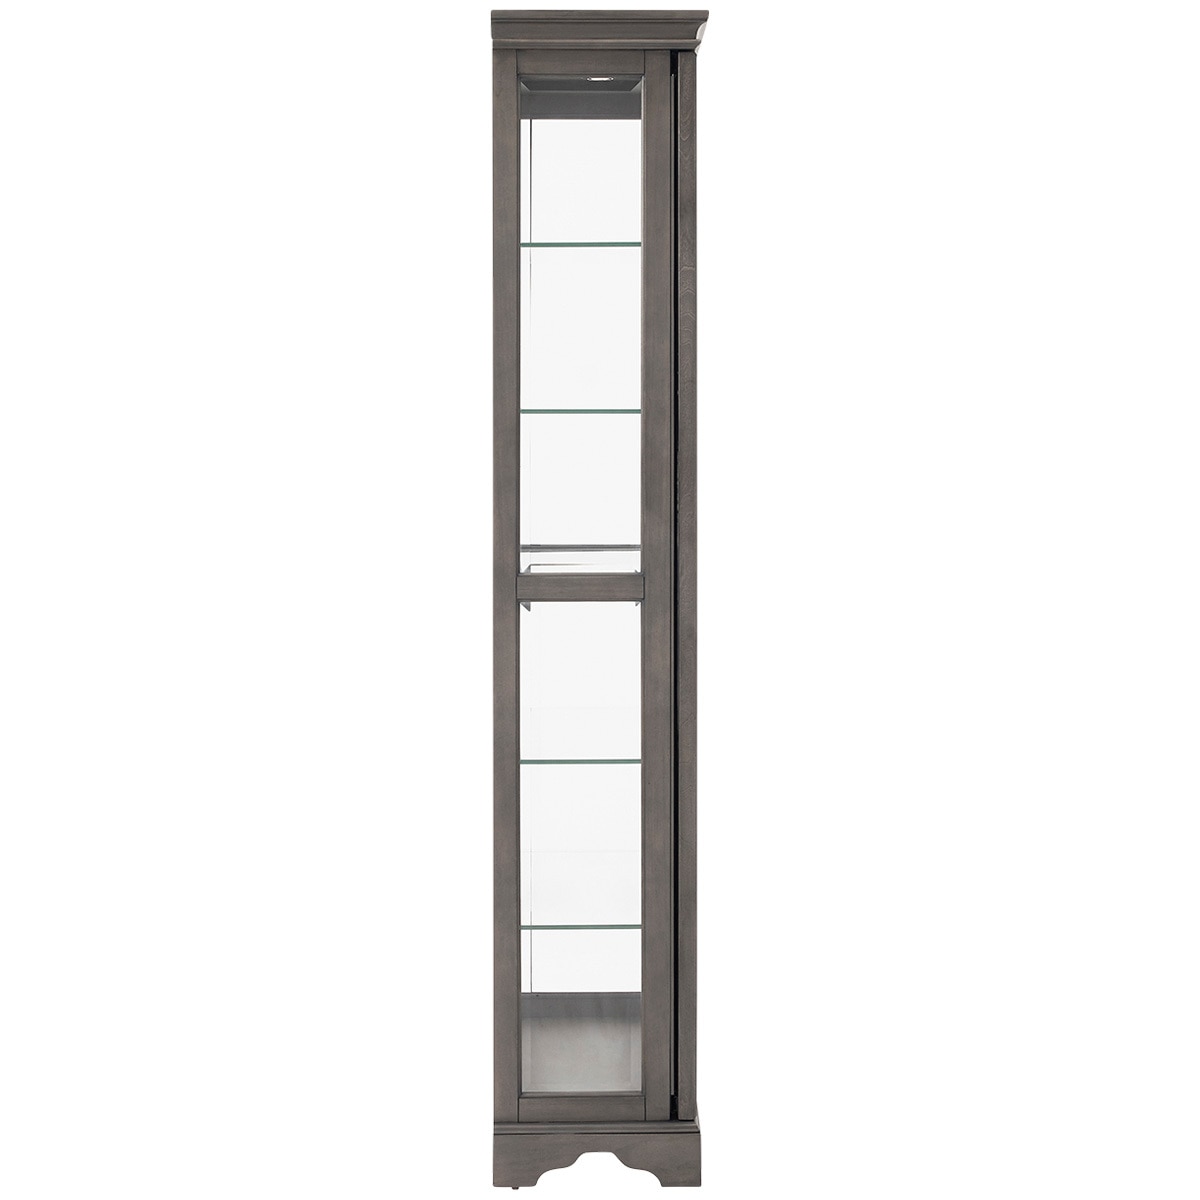 HMI Wood-Framed Sliding 2 Door Curio Cabinet